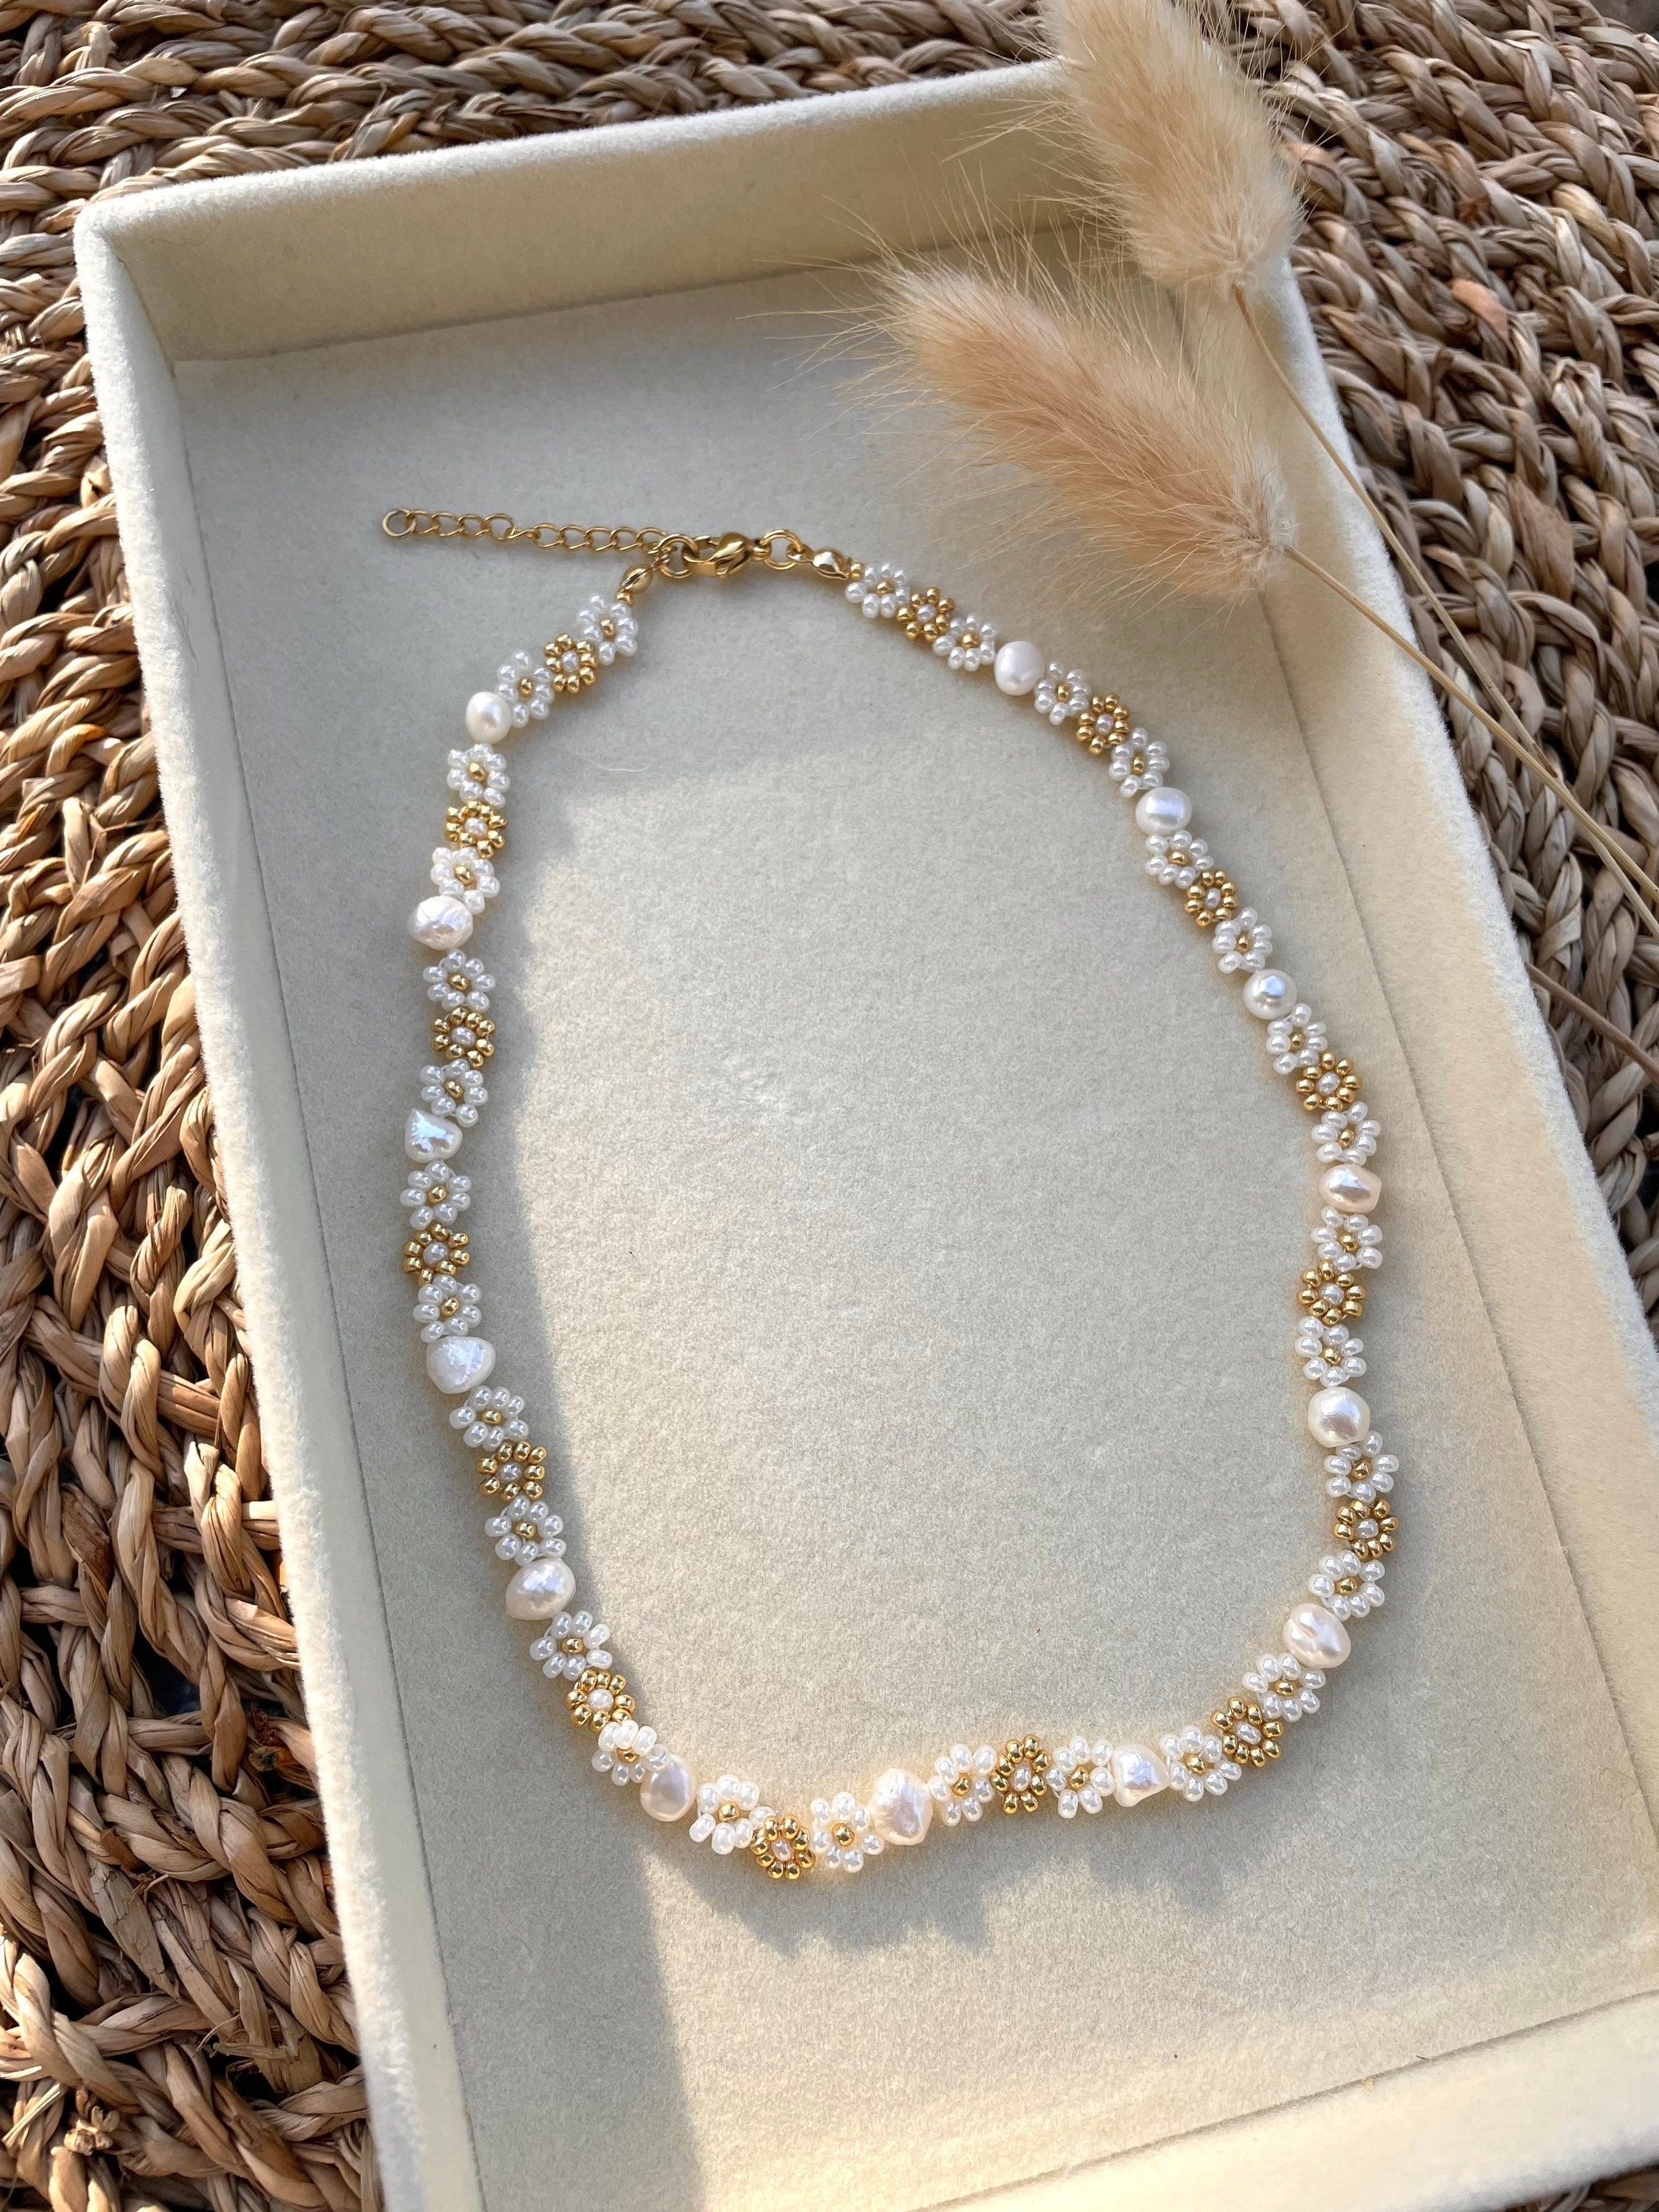 Millefiori Glass Bead Freshwater Pearl Necklace, Flower Bead Necklace,  Freshwater Pearl Jewelry, Millefiori Bead Jewelry, Glass Bead Jewelry 